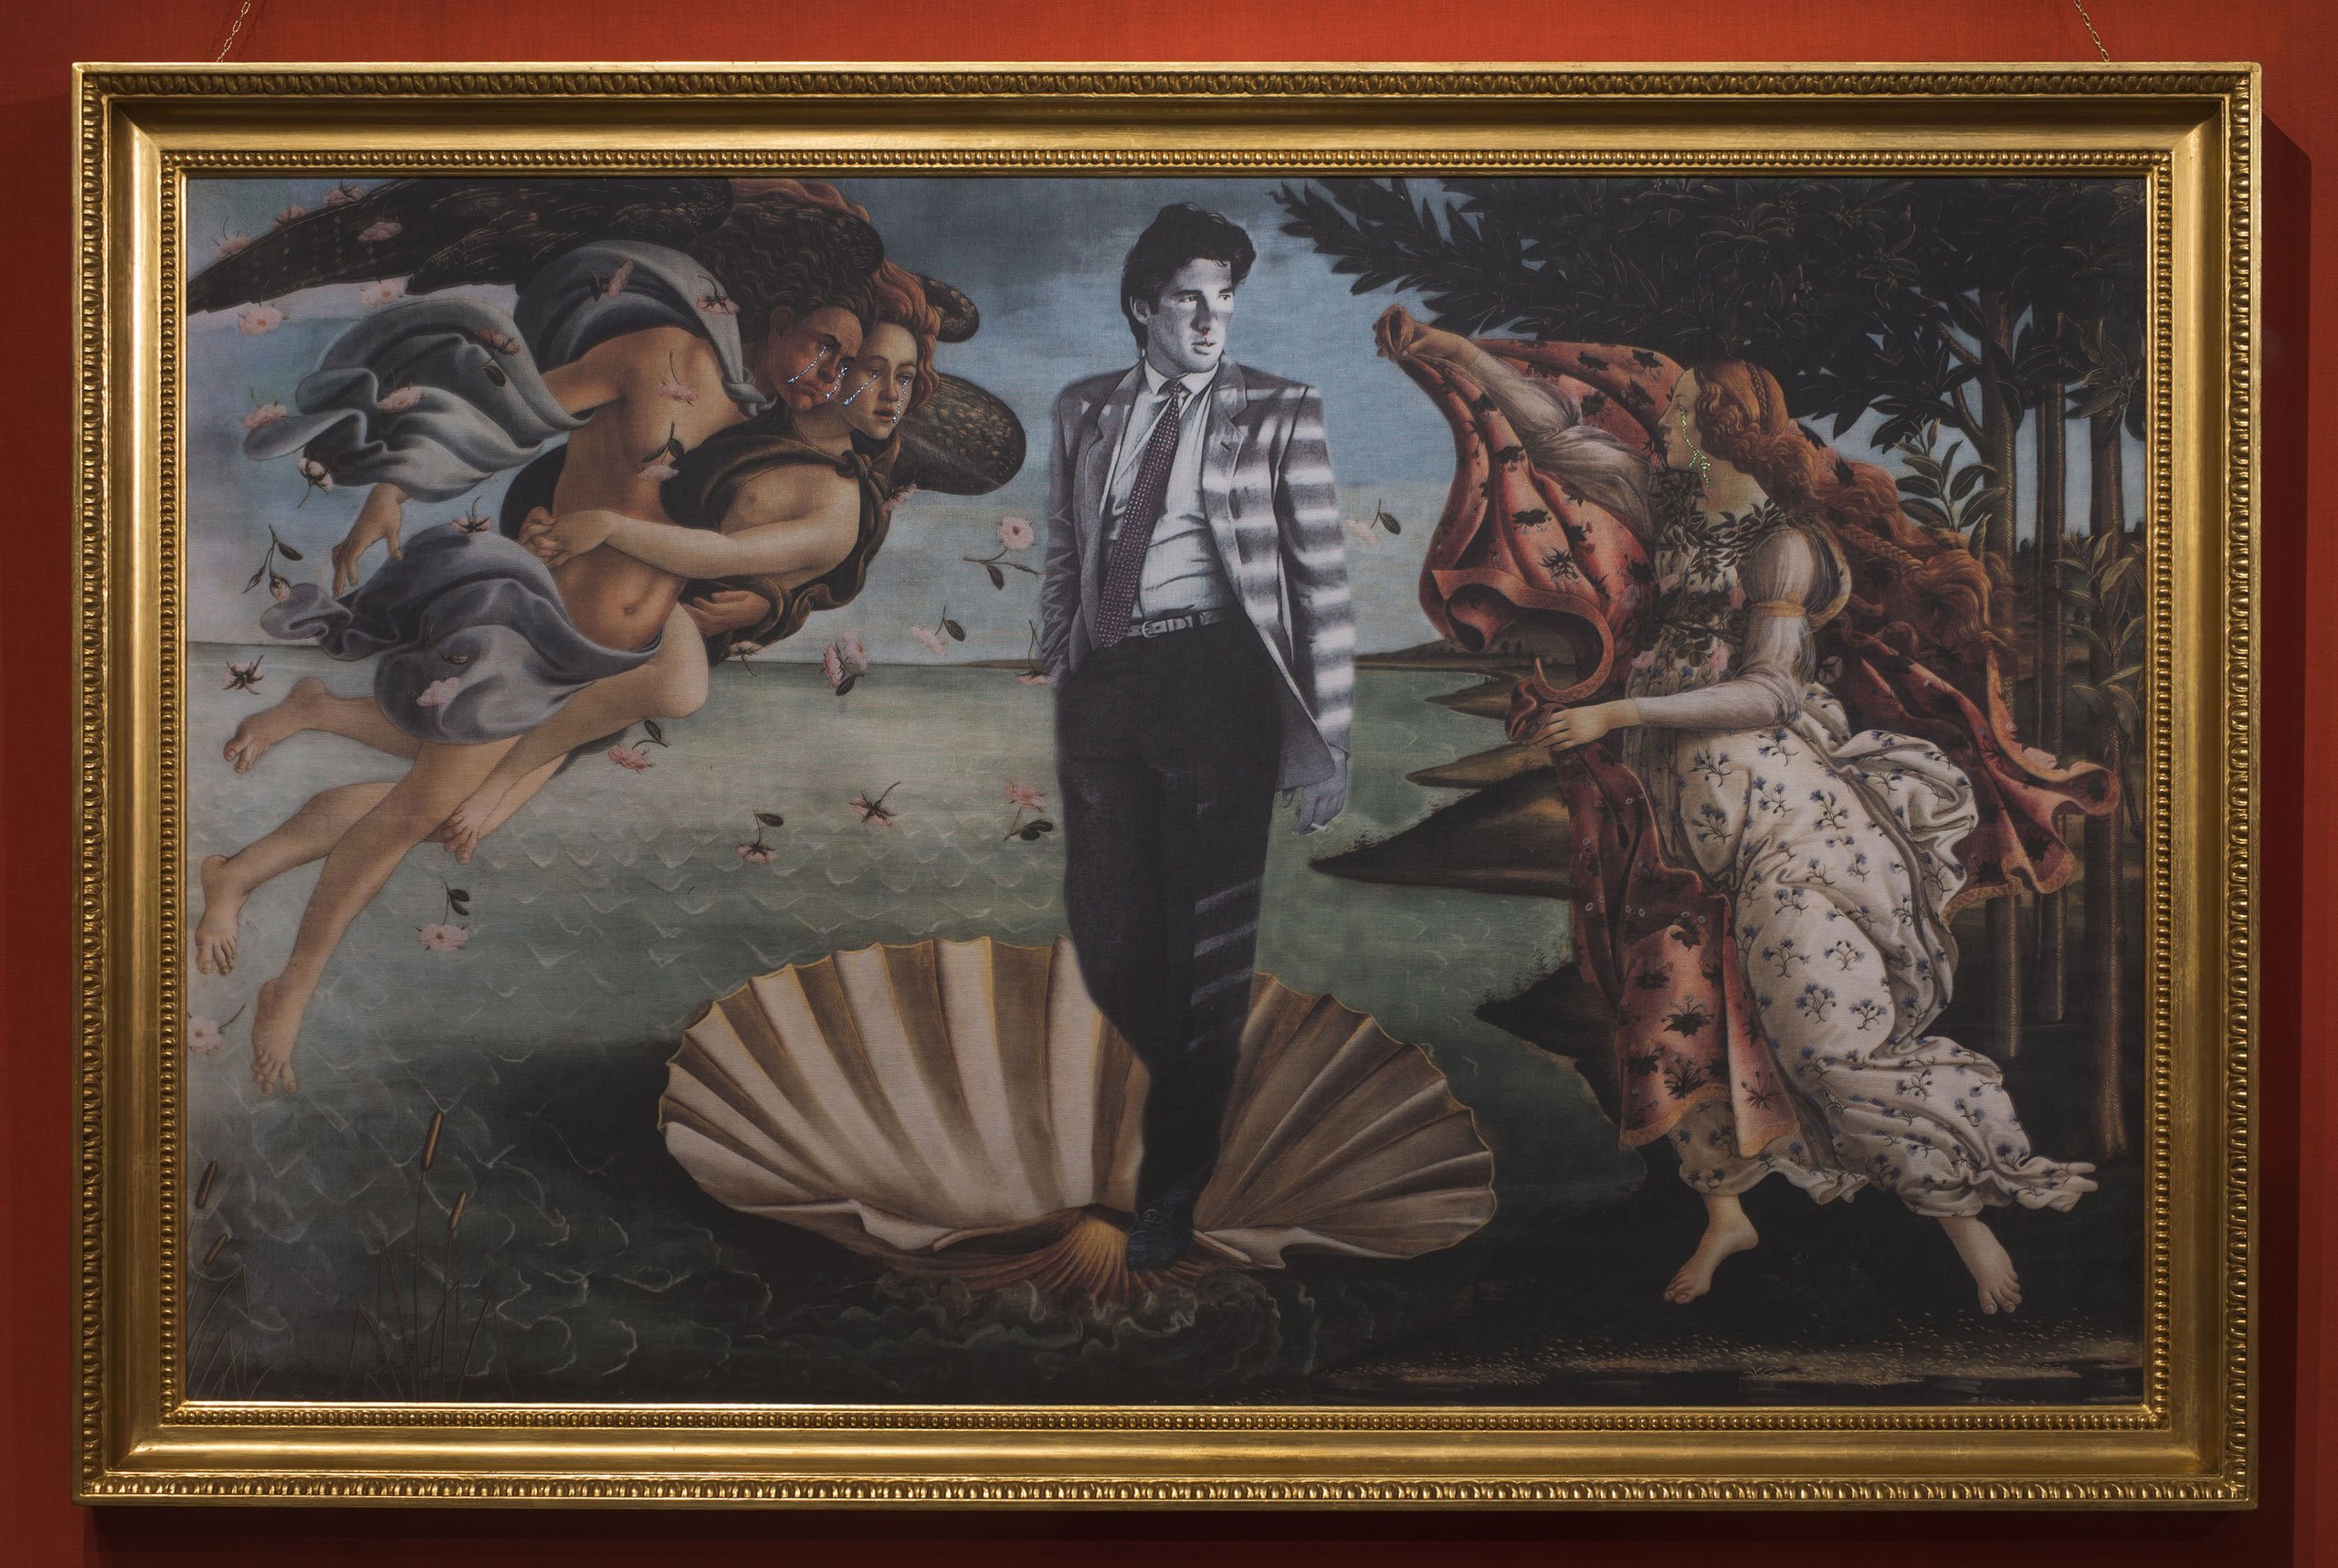 Francesco Vezzoli, La nascita di American Gigolò (After Sandro Botticelli), 2014.
Inkjet print on canvas, metallic embroidery. 136 x 208 cm.
Courtesy the artist and APALAZZOGALLERY.